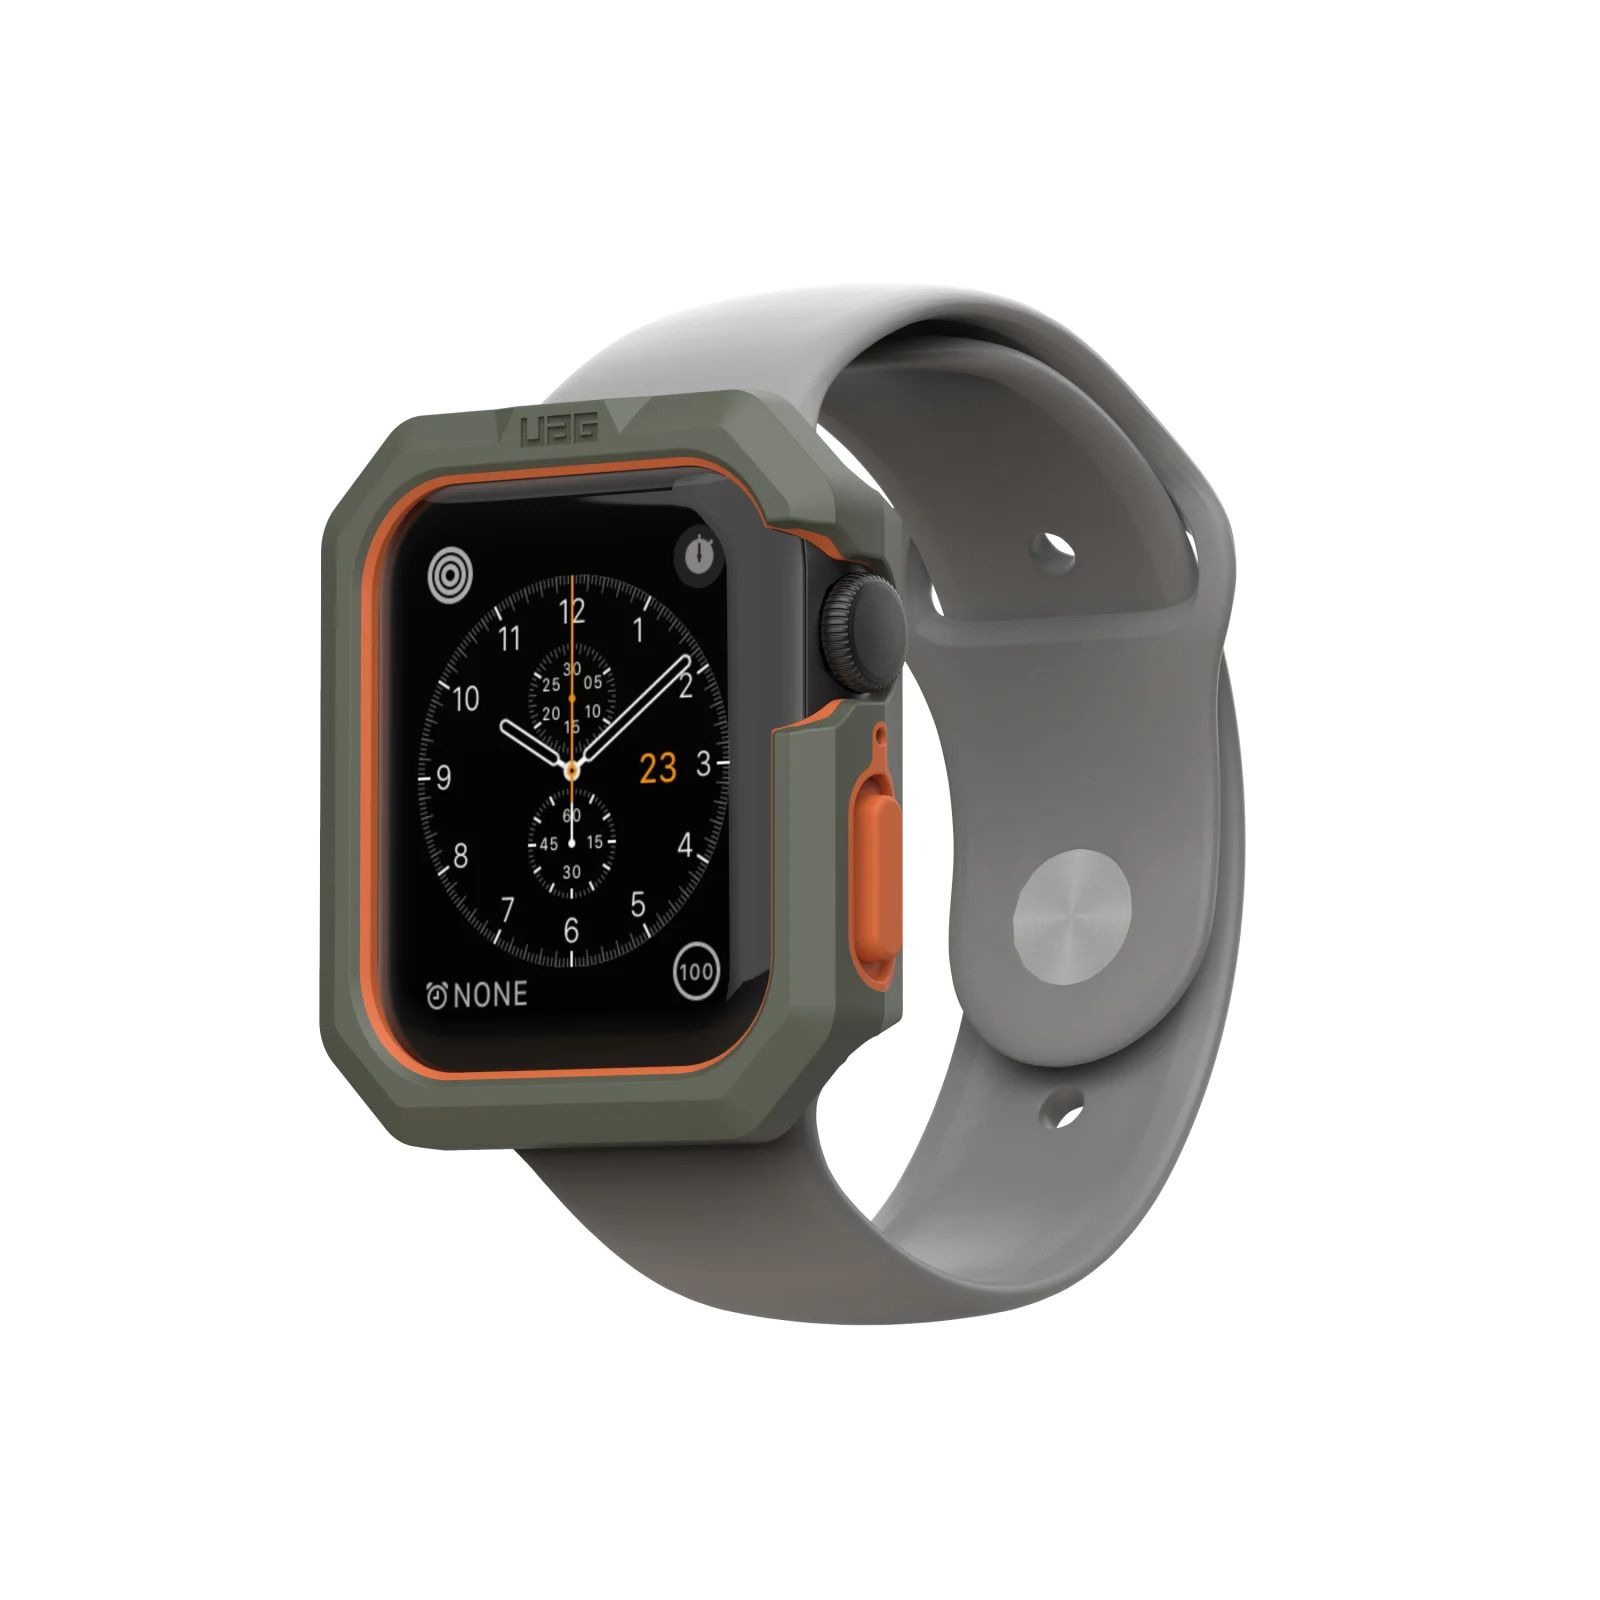  Ốp chống sốc UAG Civilian cho Apple Watch 